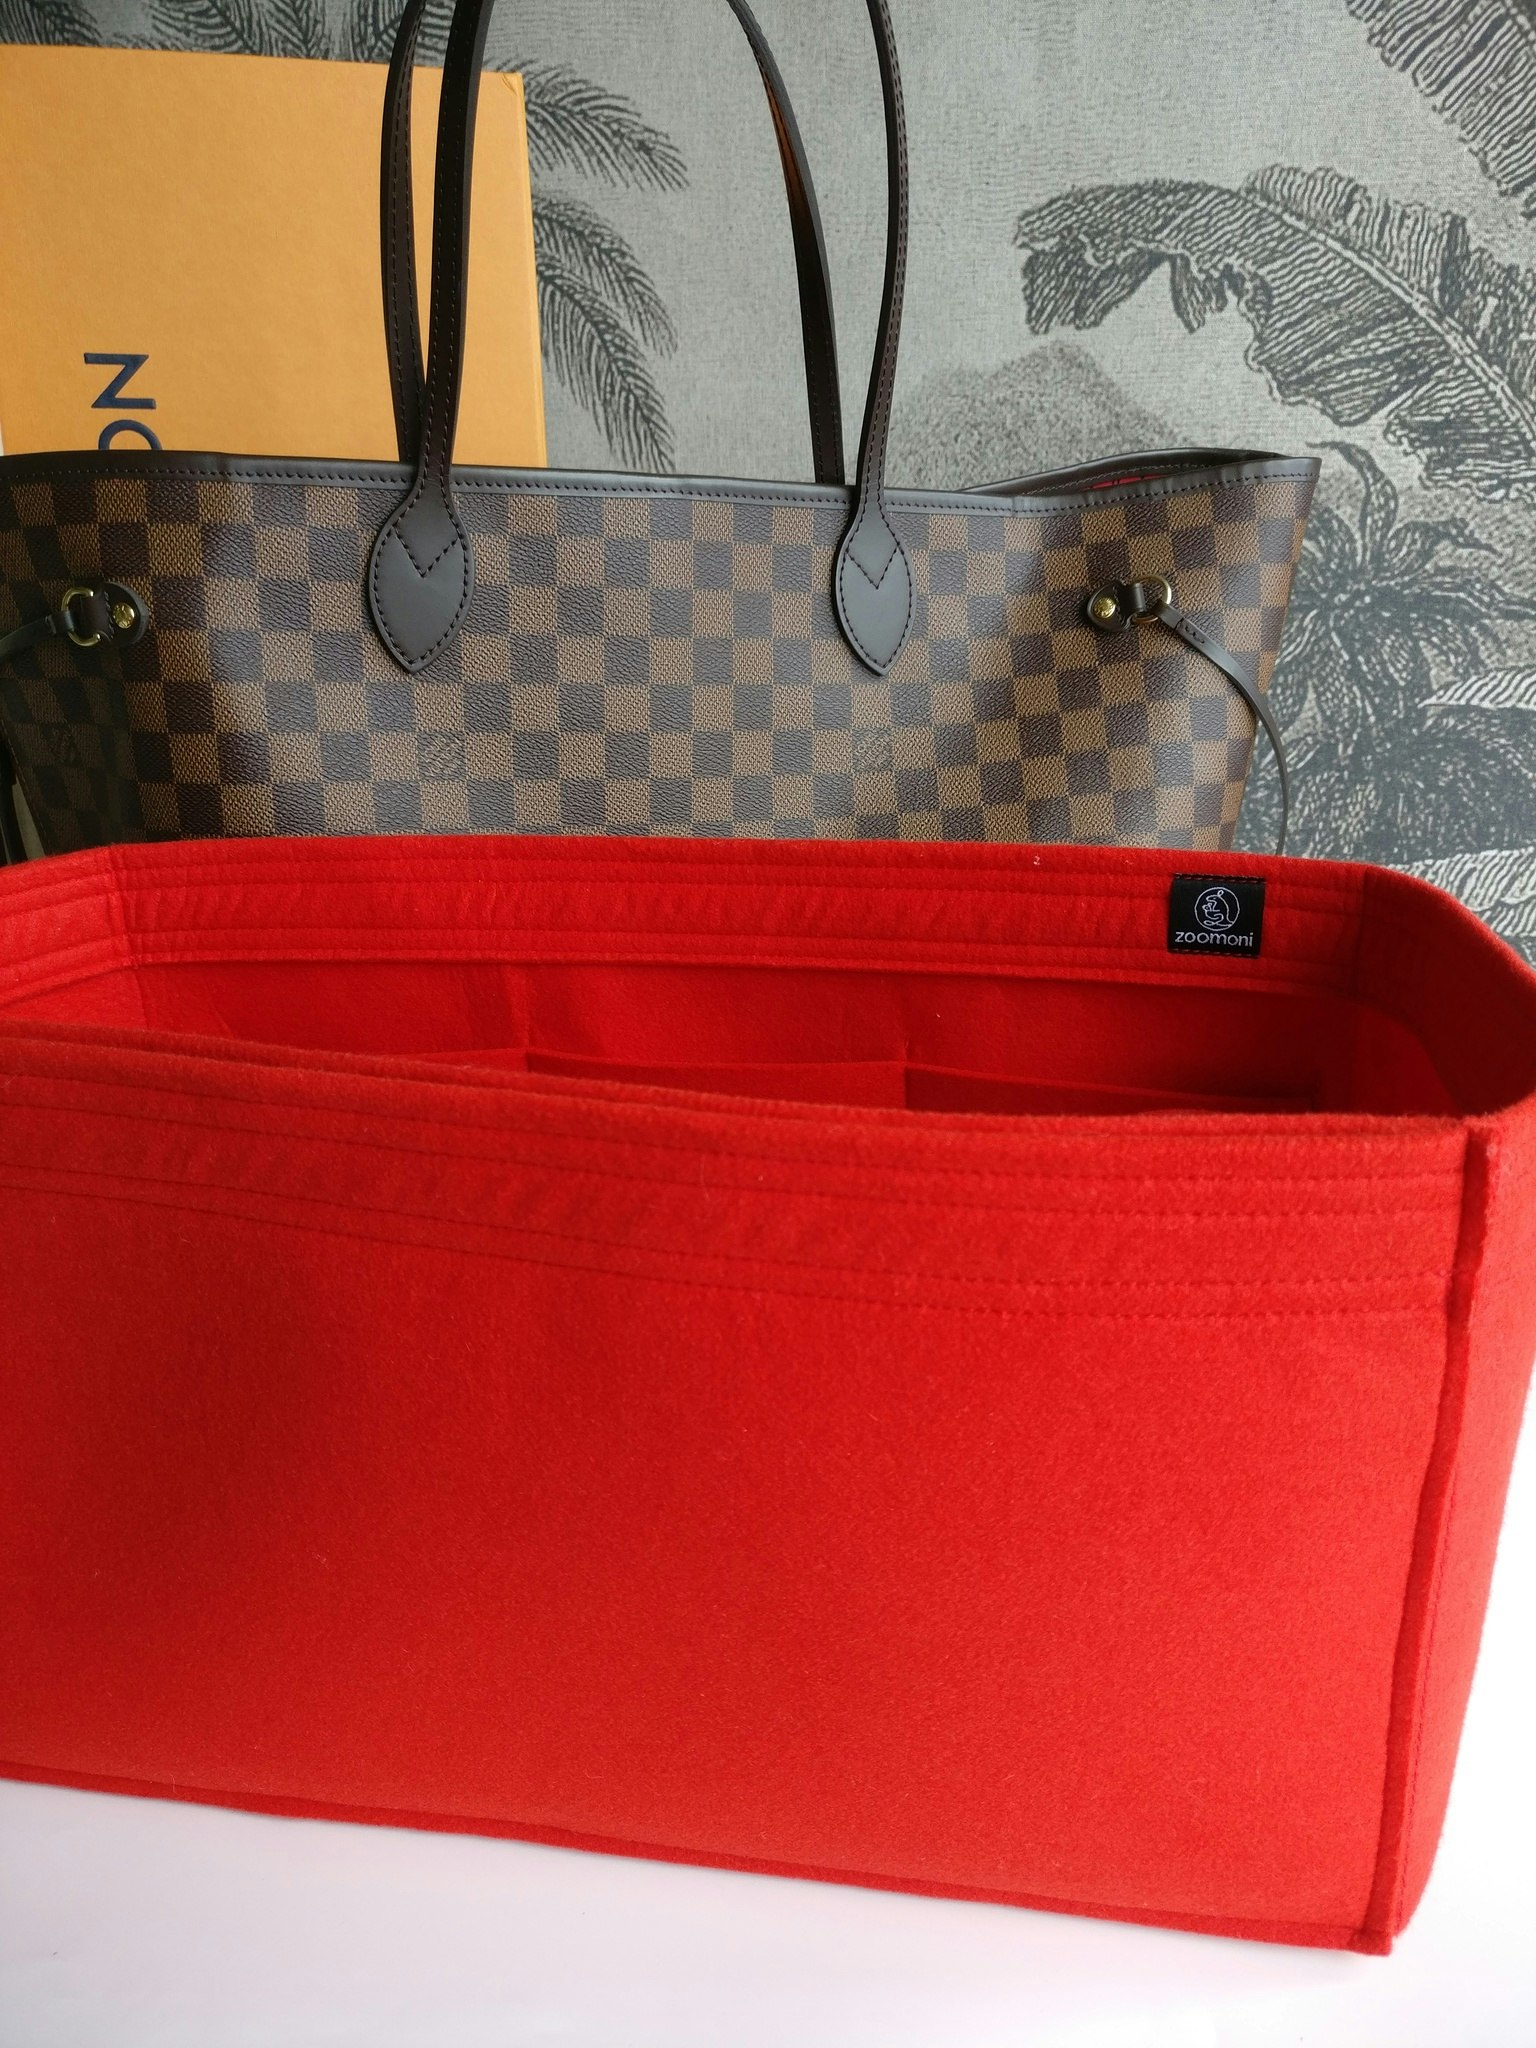 Zoomoni Bag Organizer for my Louis Vuitton Neverful MM 